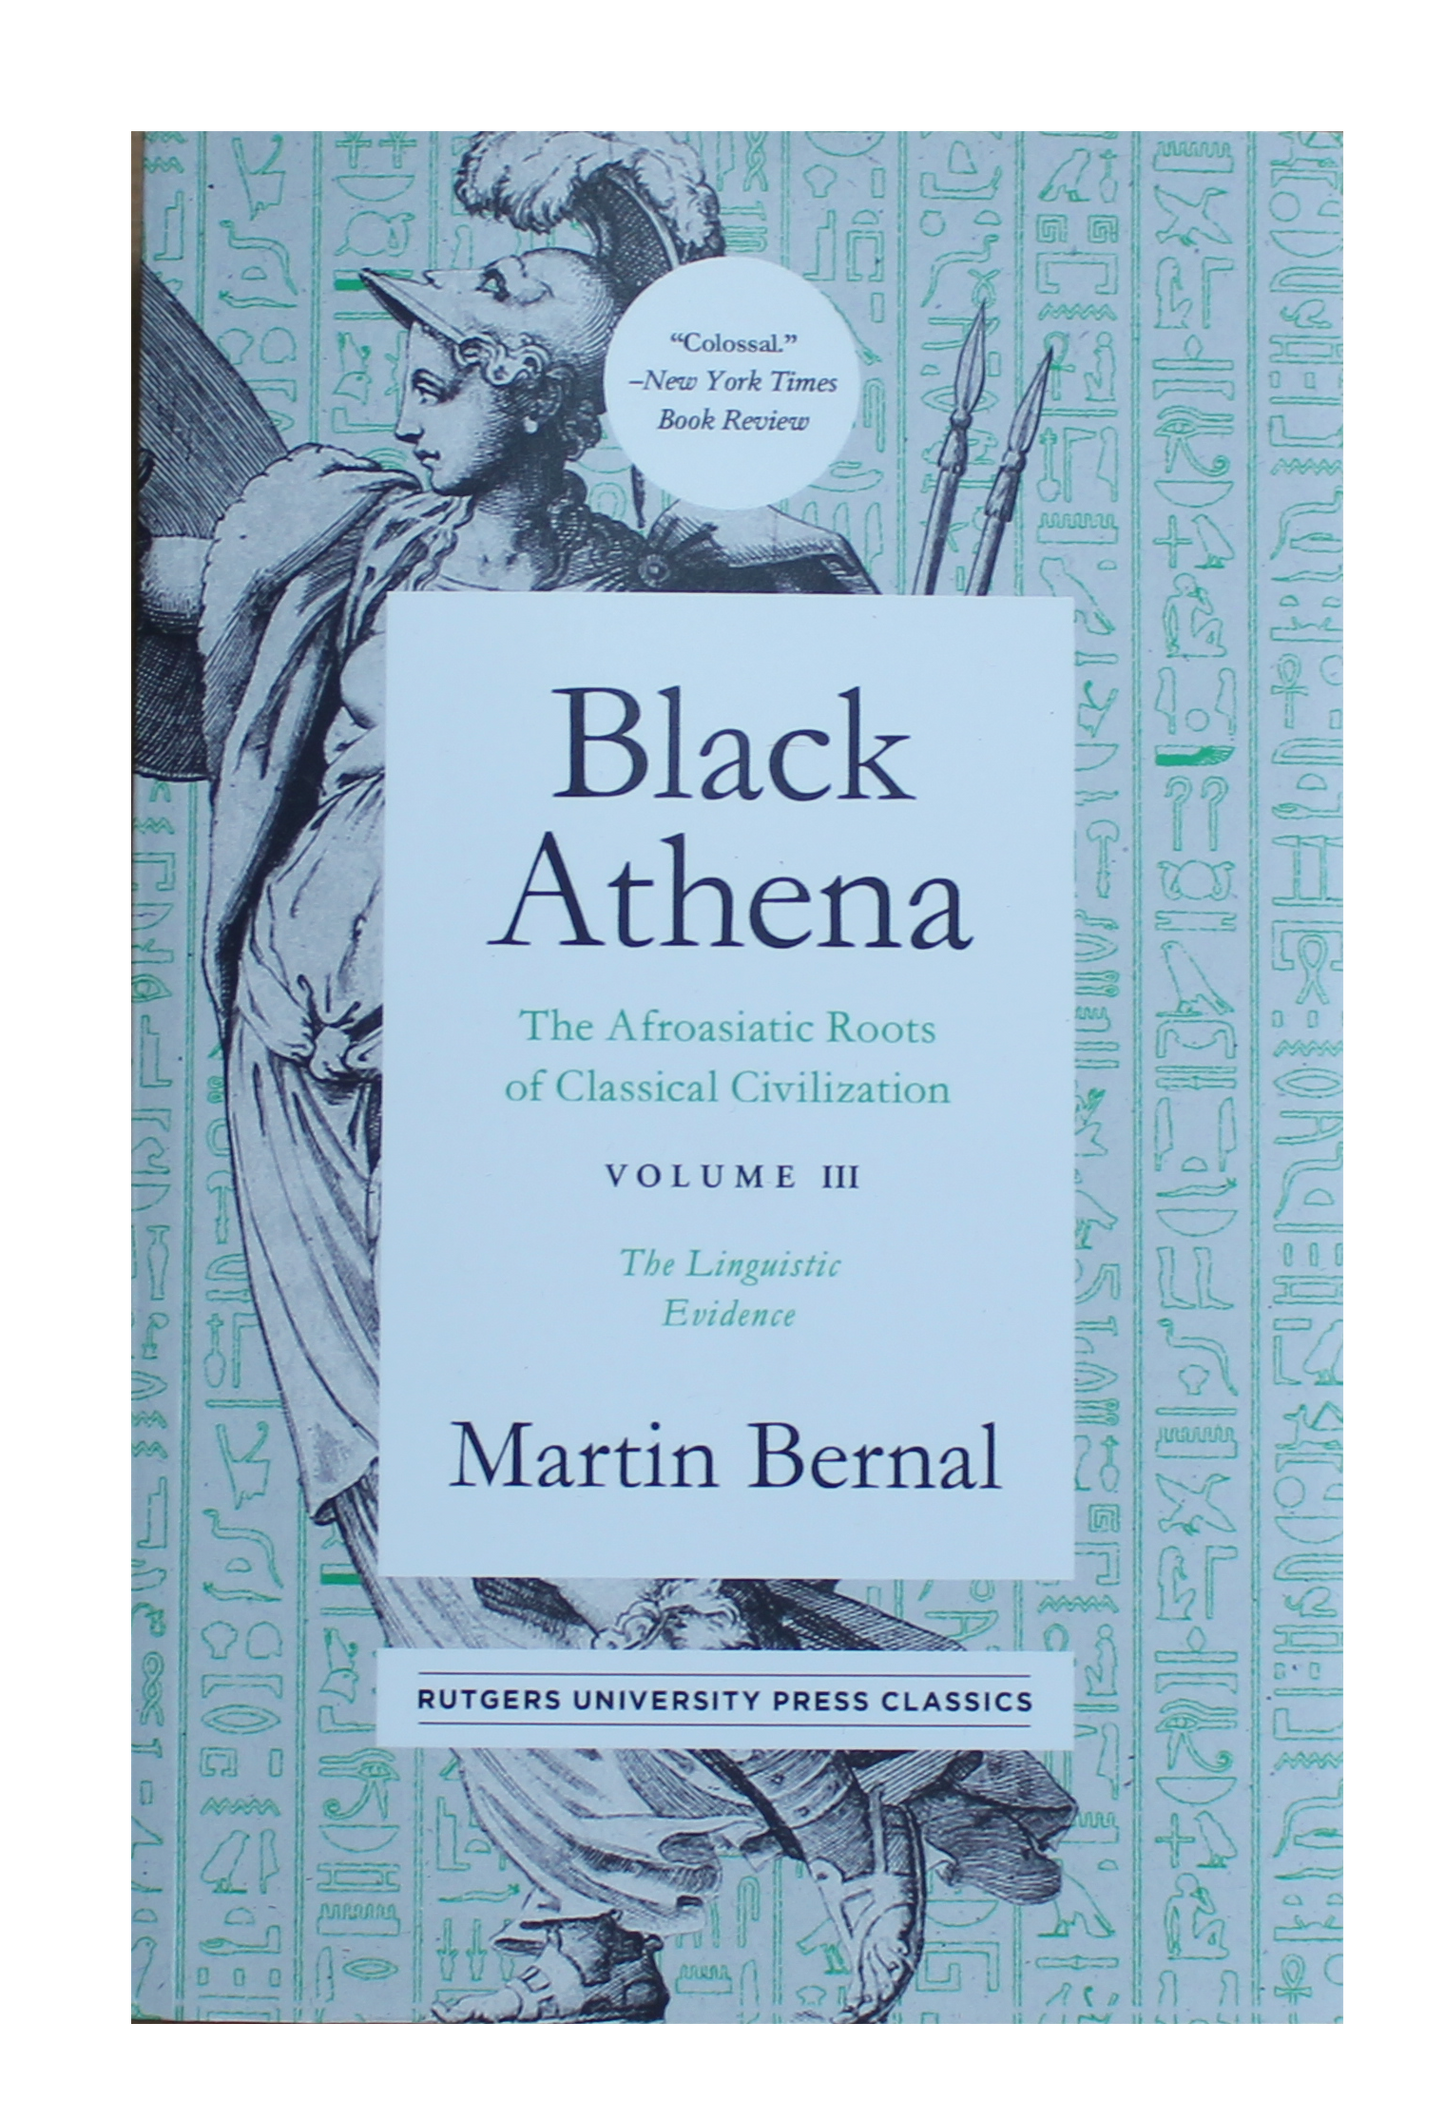 Black Athena Volume III: The Linguistic Evidence - Martin Bernal